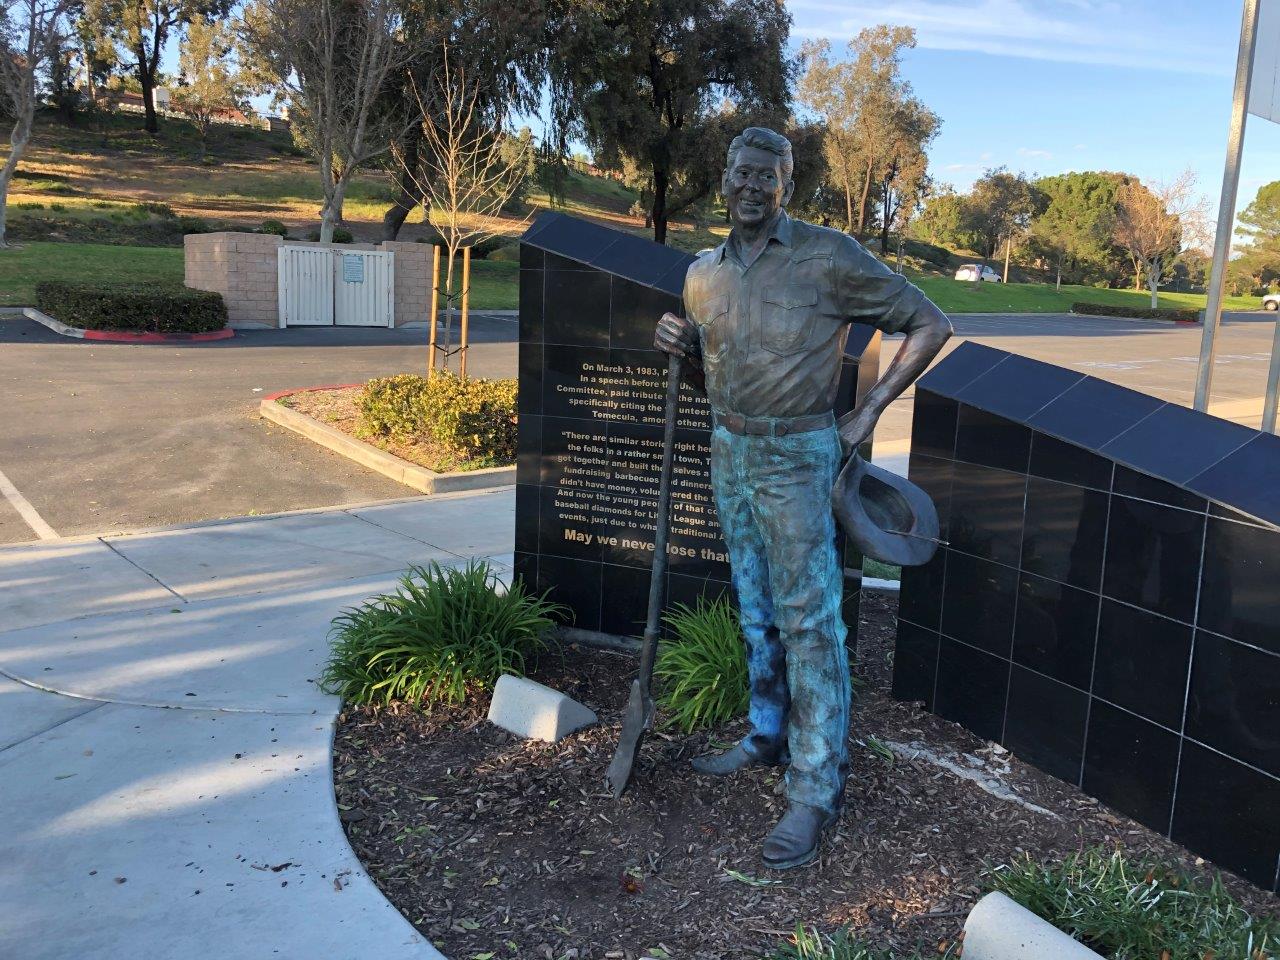 reagan statue in ronald reagan sports park in temecula, California